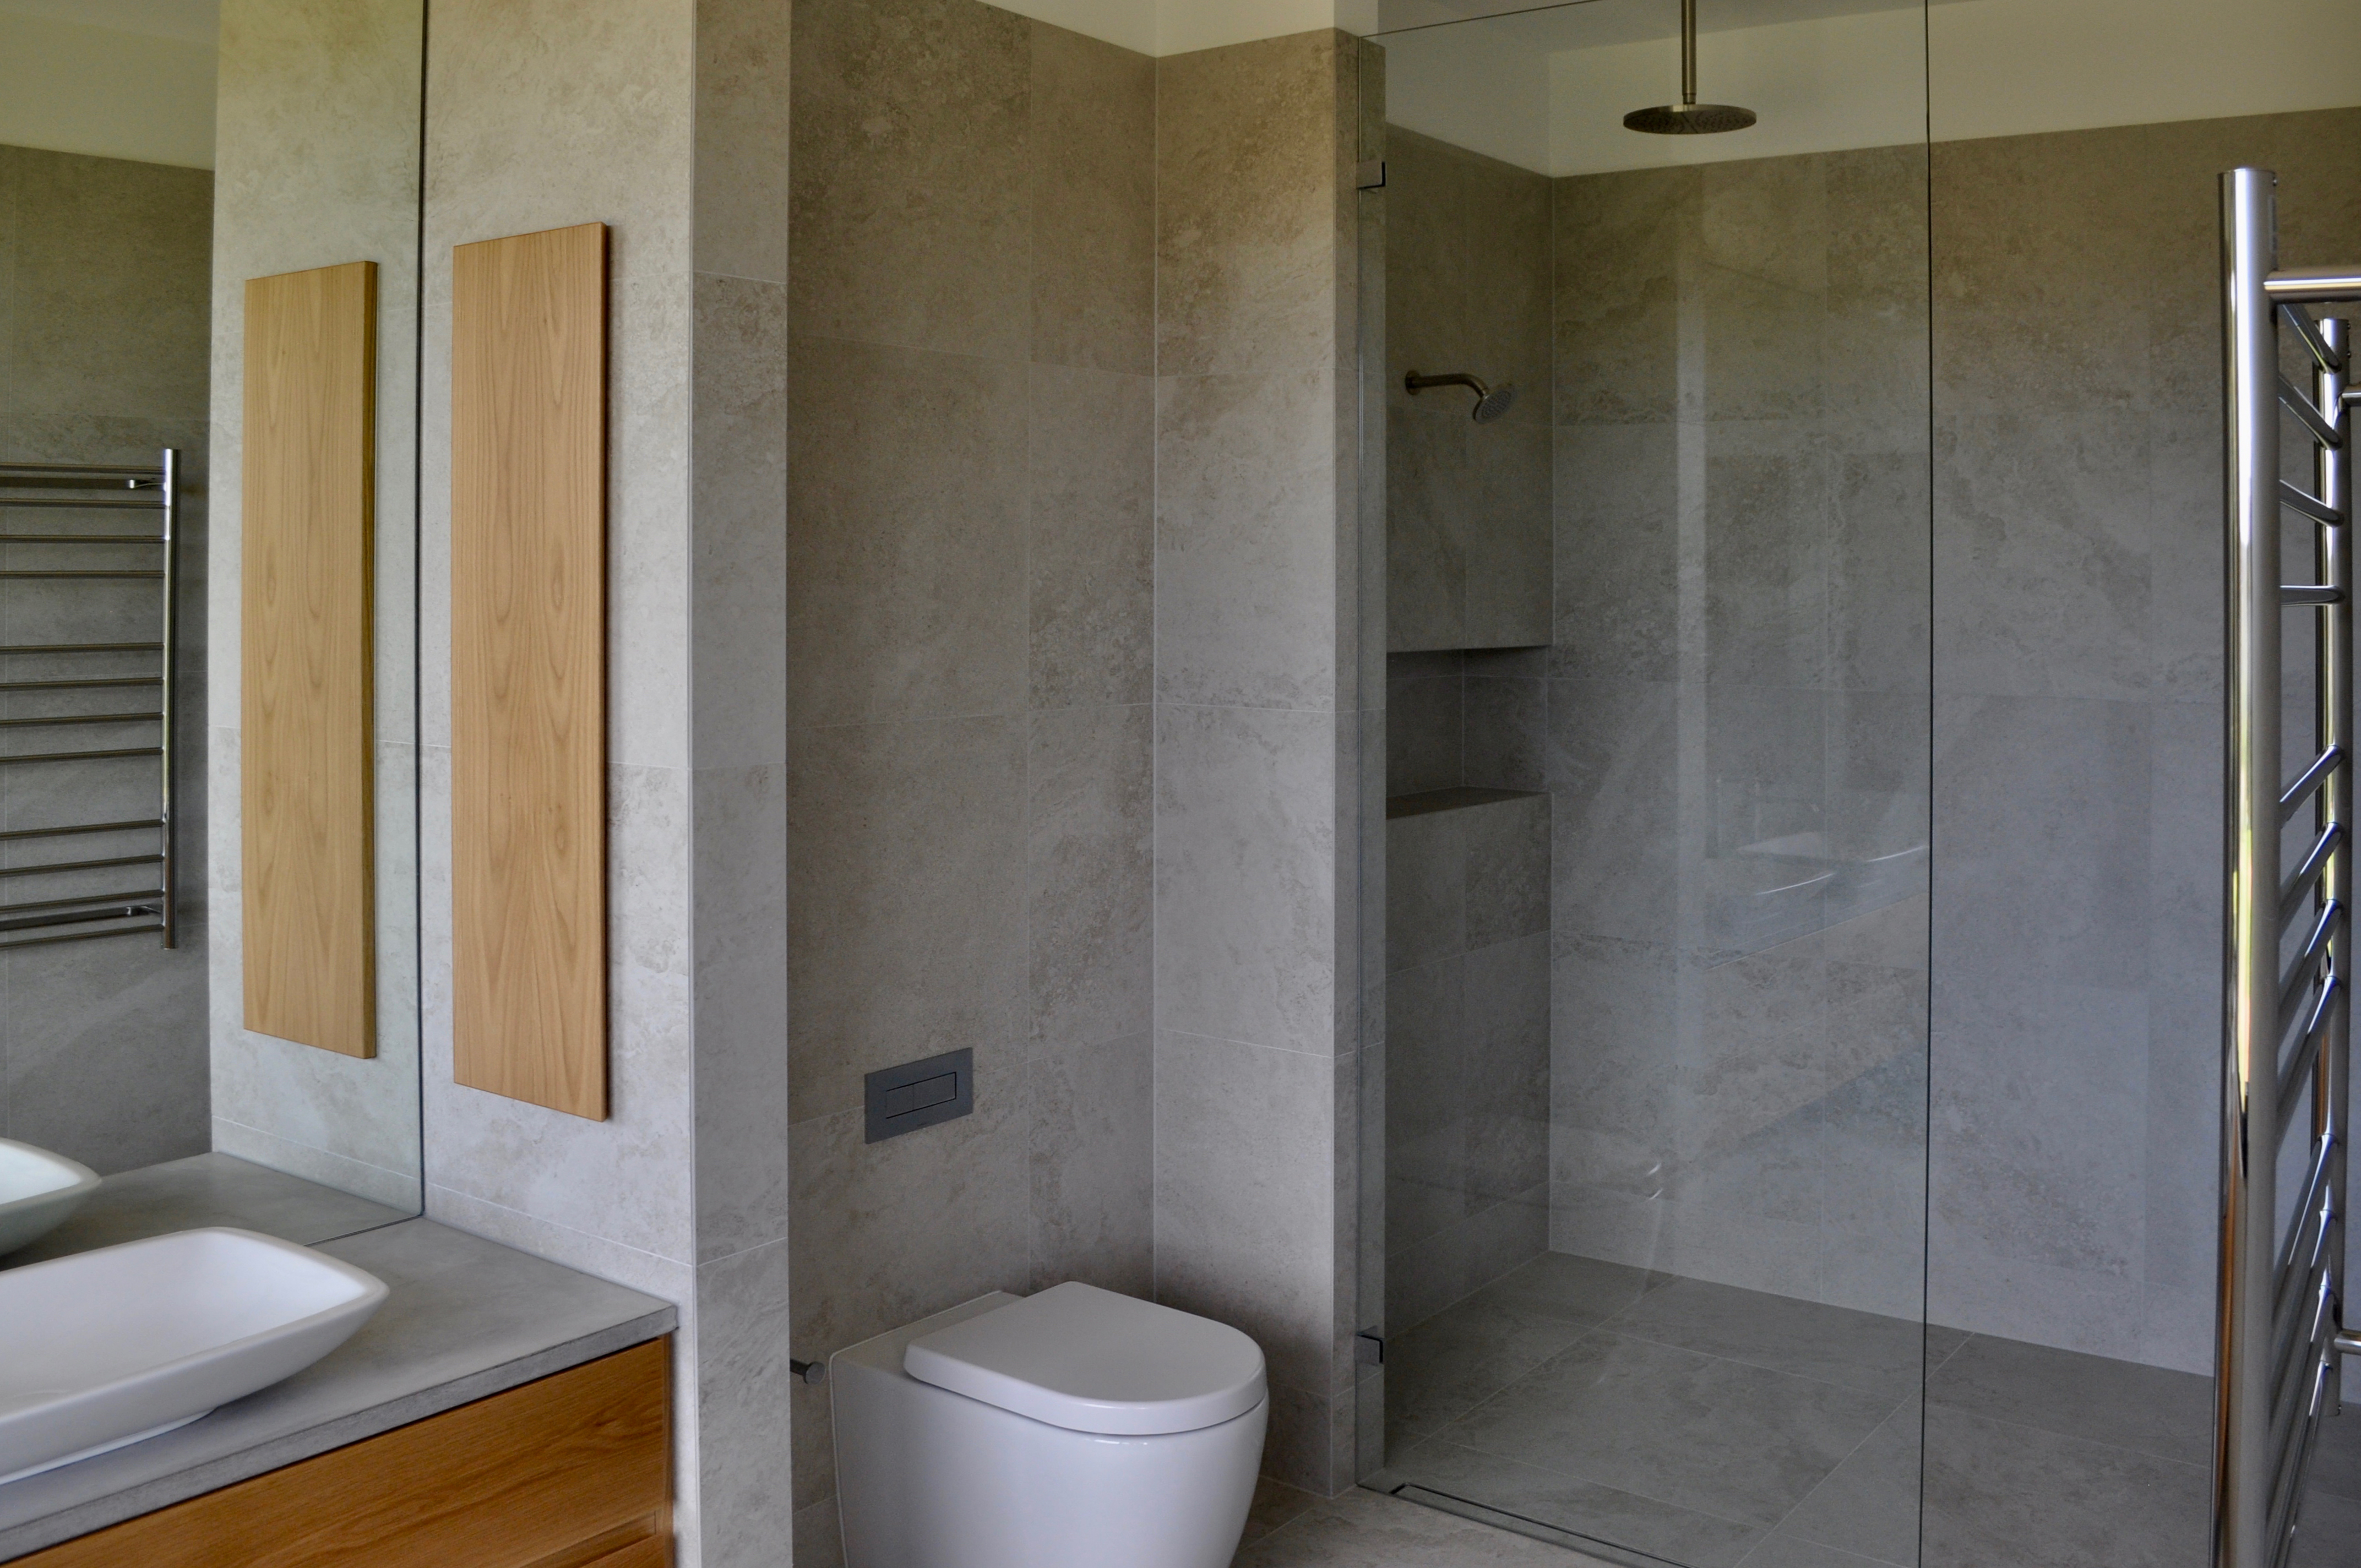 Summertown House | Bathroom Inspiration & Design Ideas